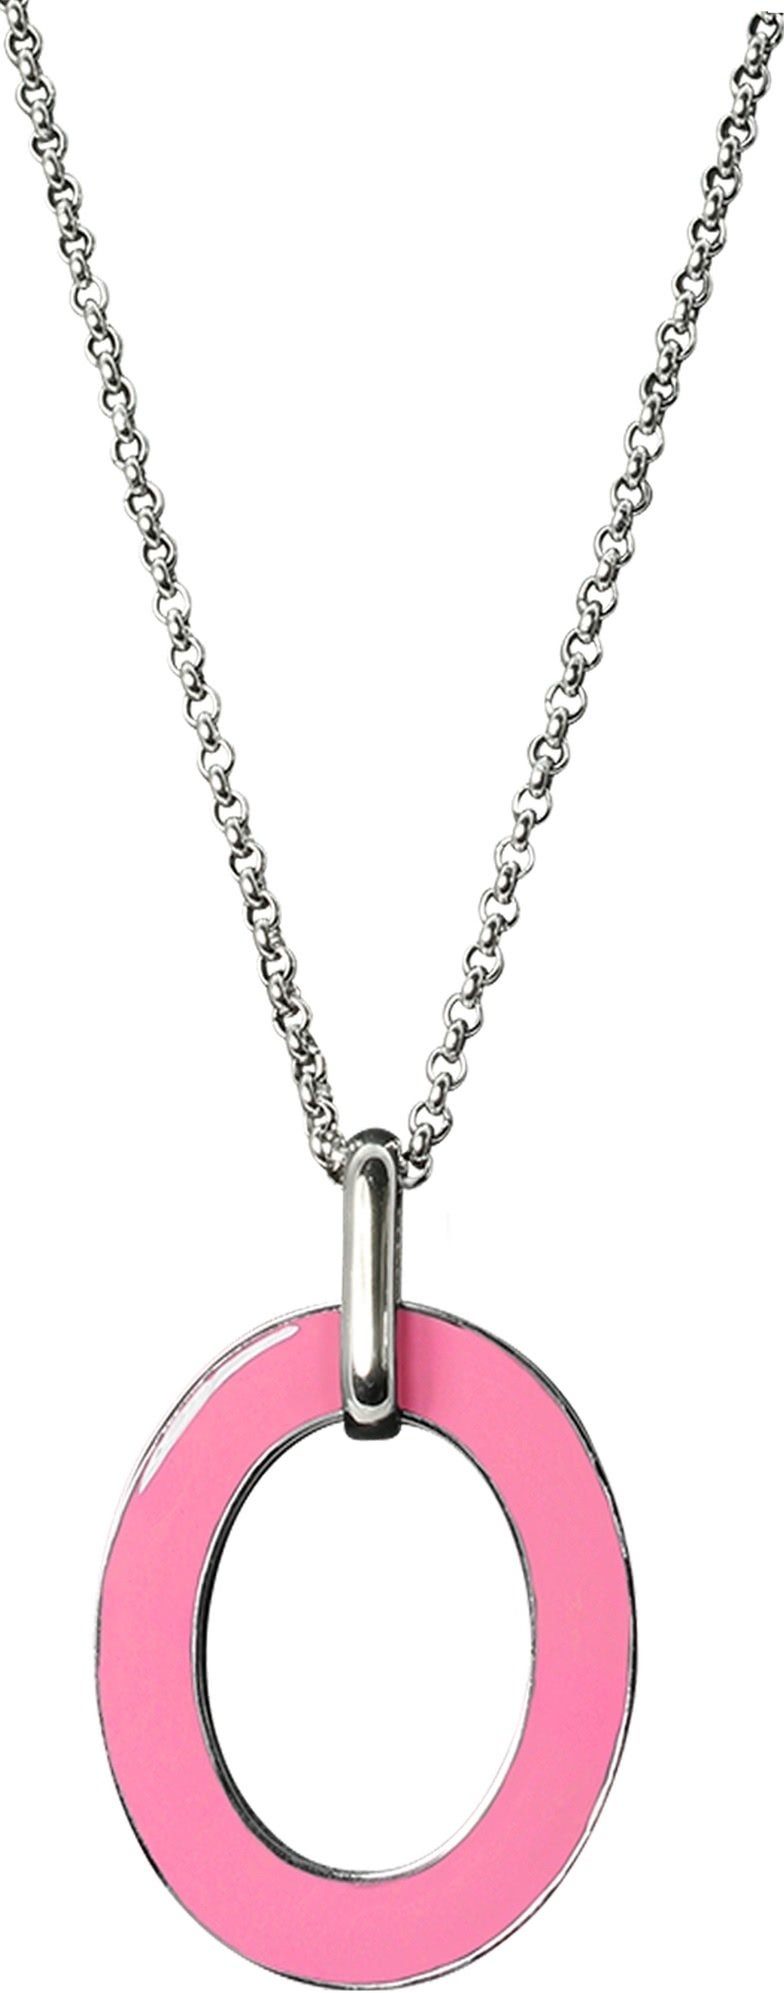 Amello Edelstahlkette Amello Oval Halskette rosa weiß (Halsketten, Halskette), Damen-Halskette (Oval) ca. 80cm + 4cm Verlängerung, Edelstahl (Stainle